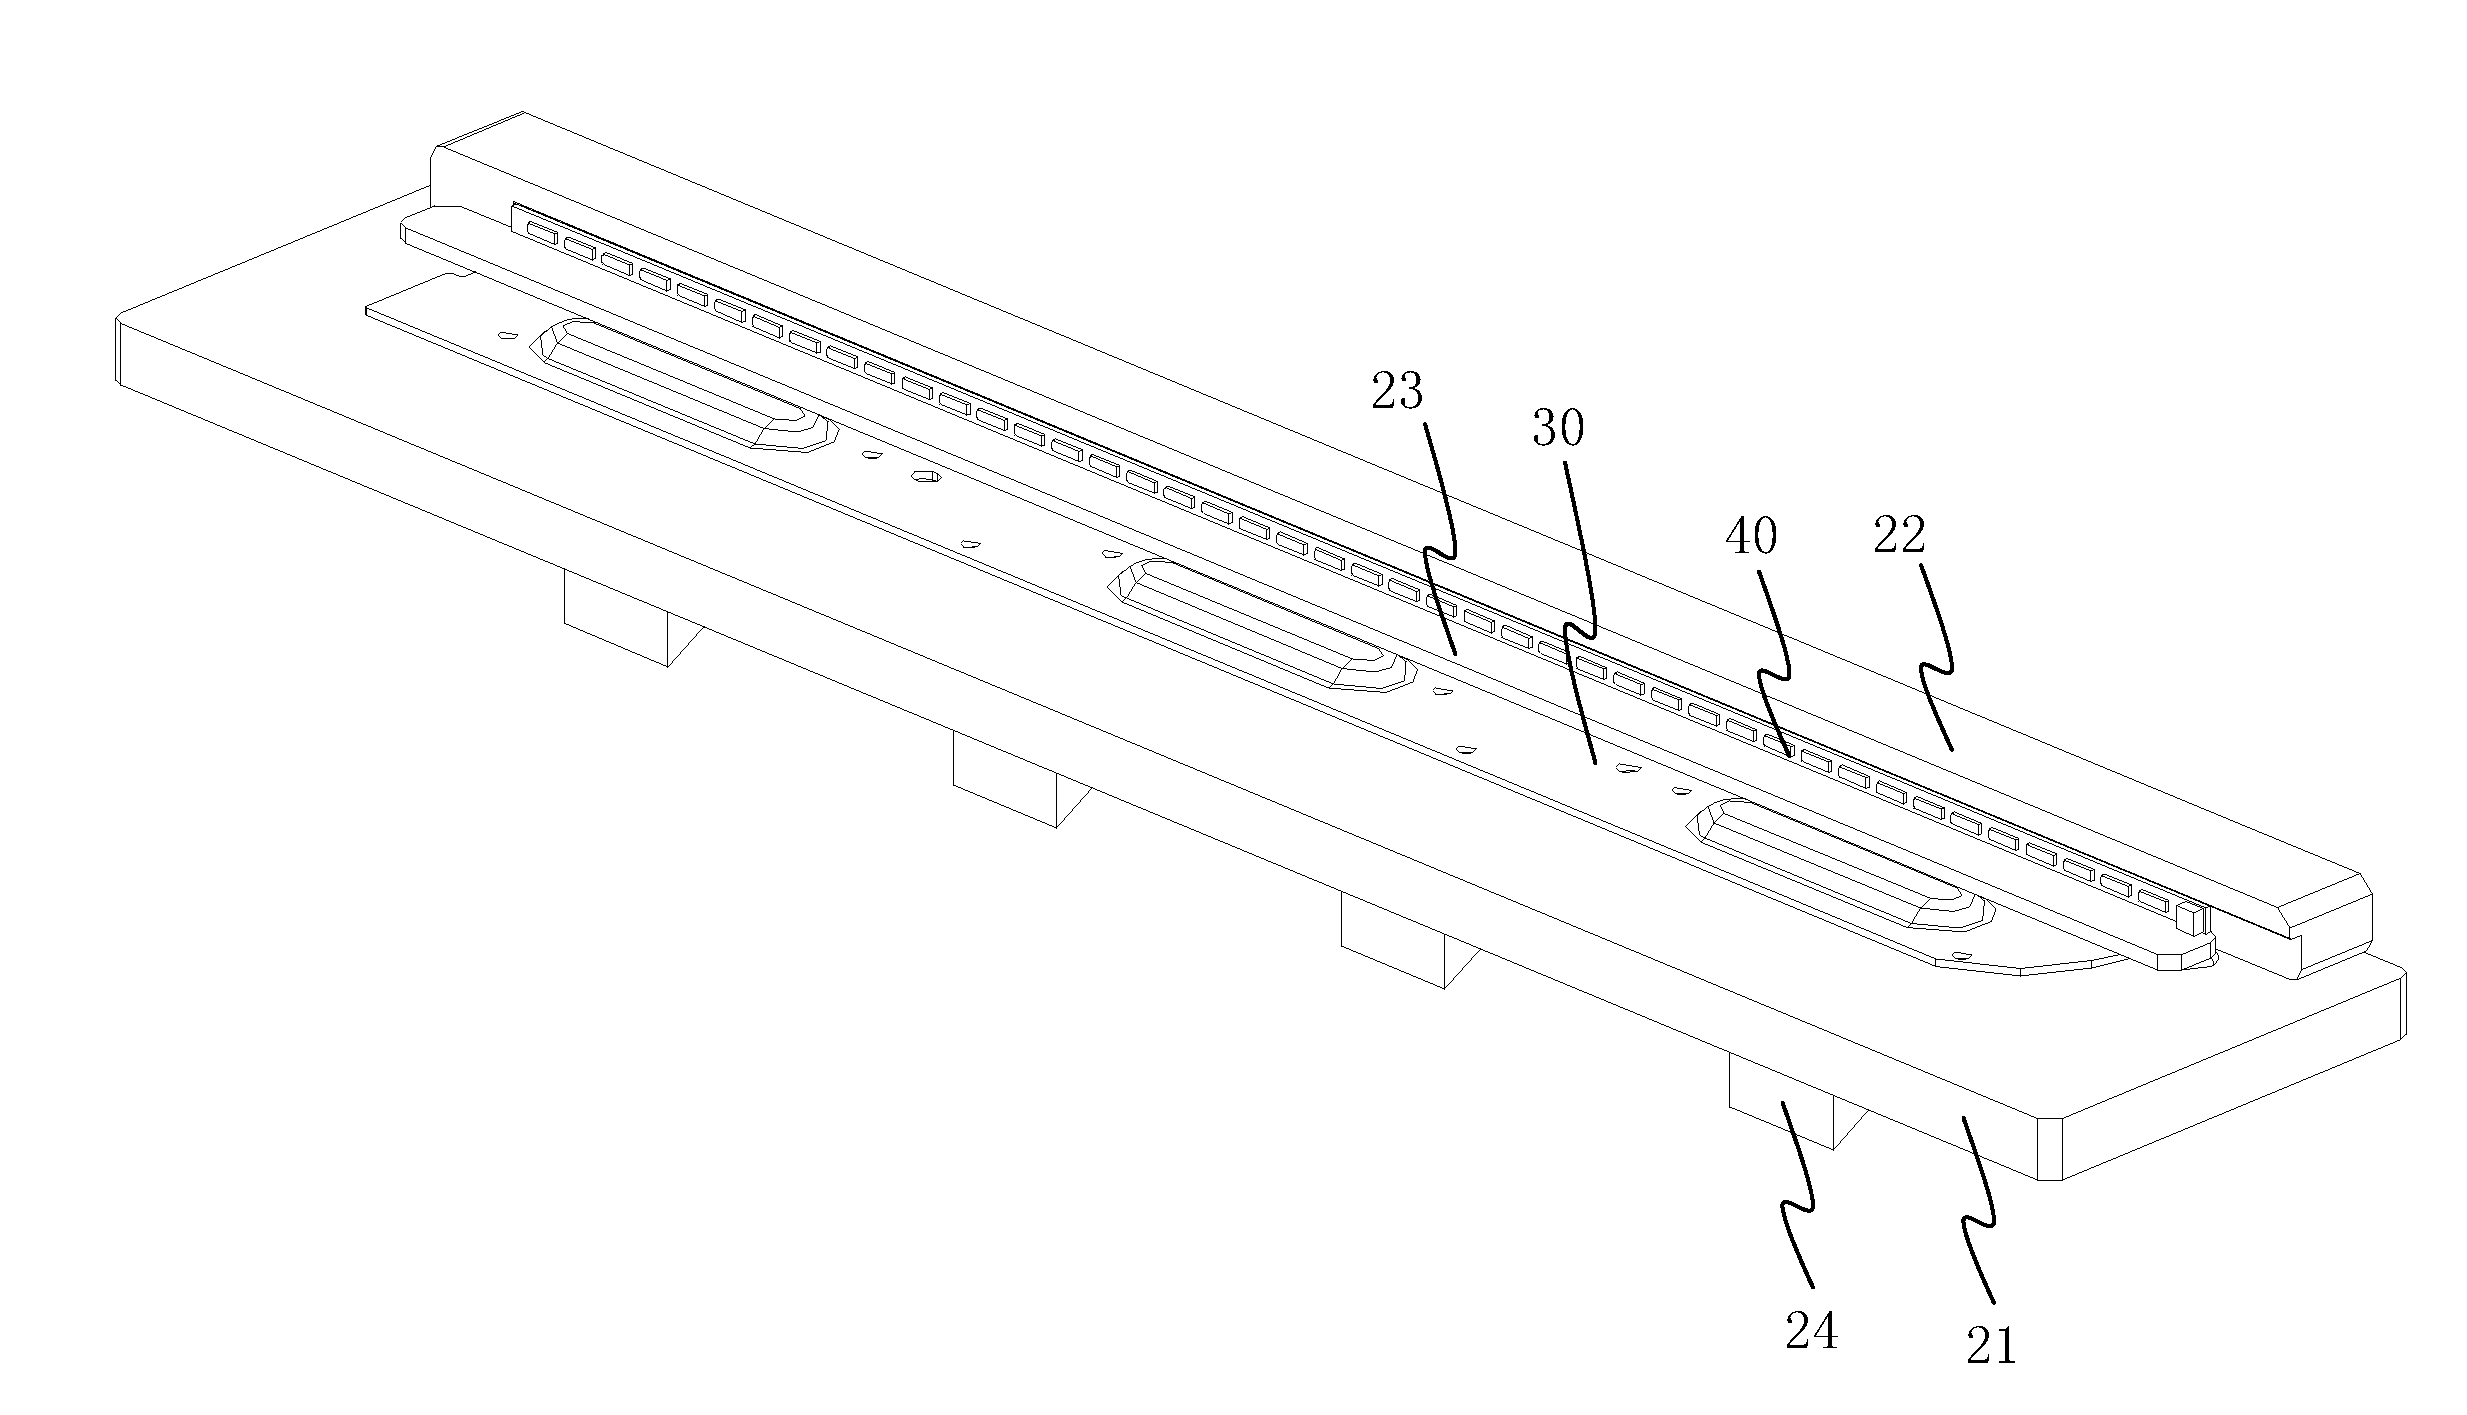 Light-bar adhesion fixture and corresponding light-bar adhesion method